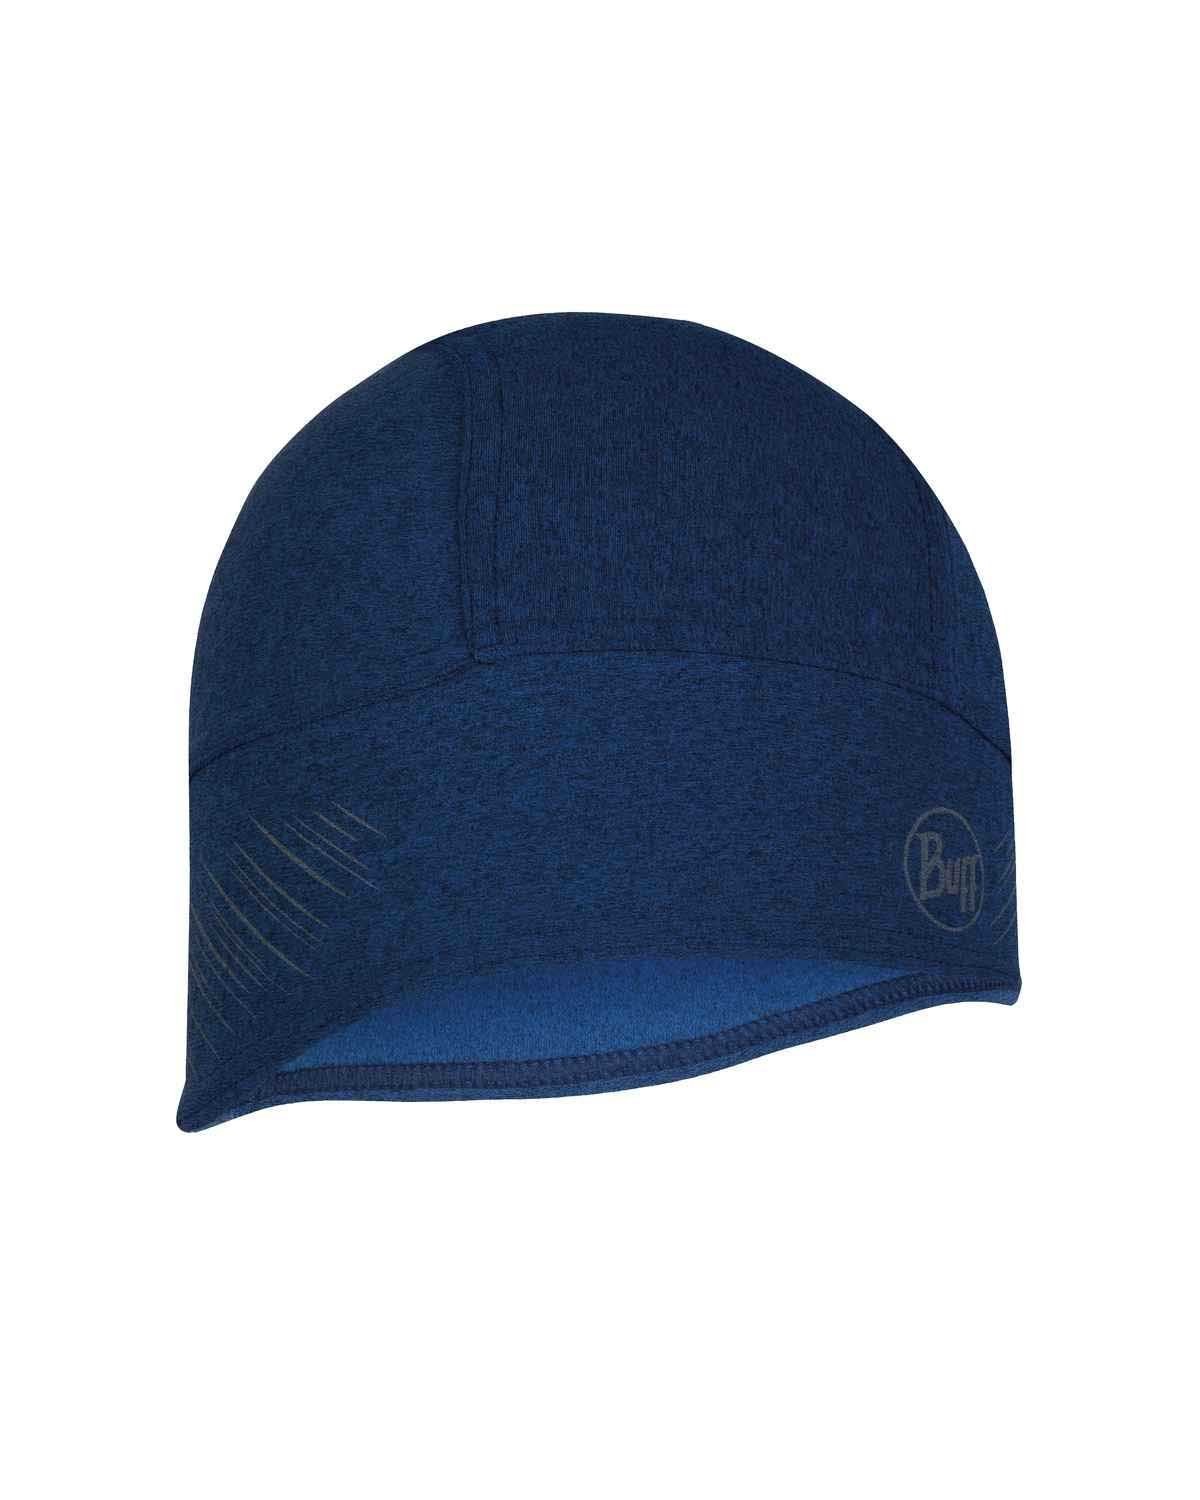 Шапка Buff Tech fleece hat R_night blue - фото 1